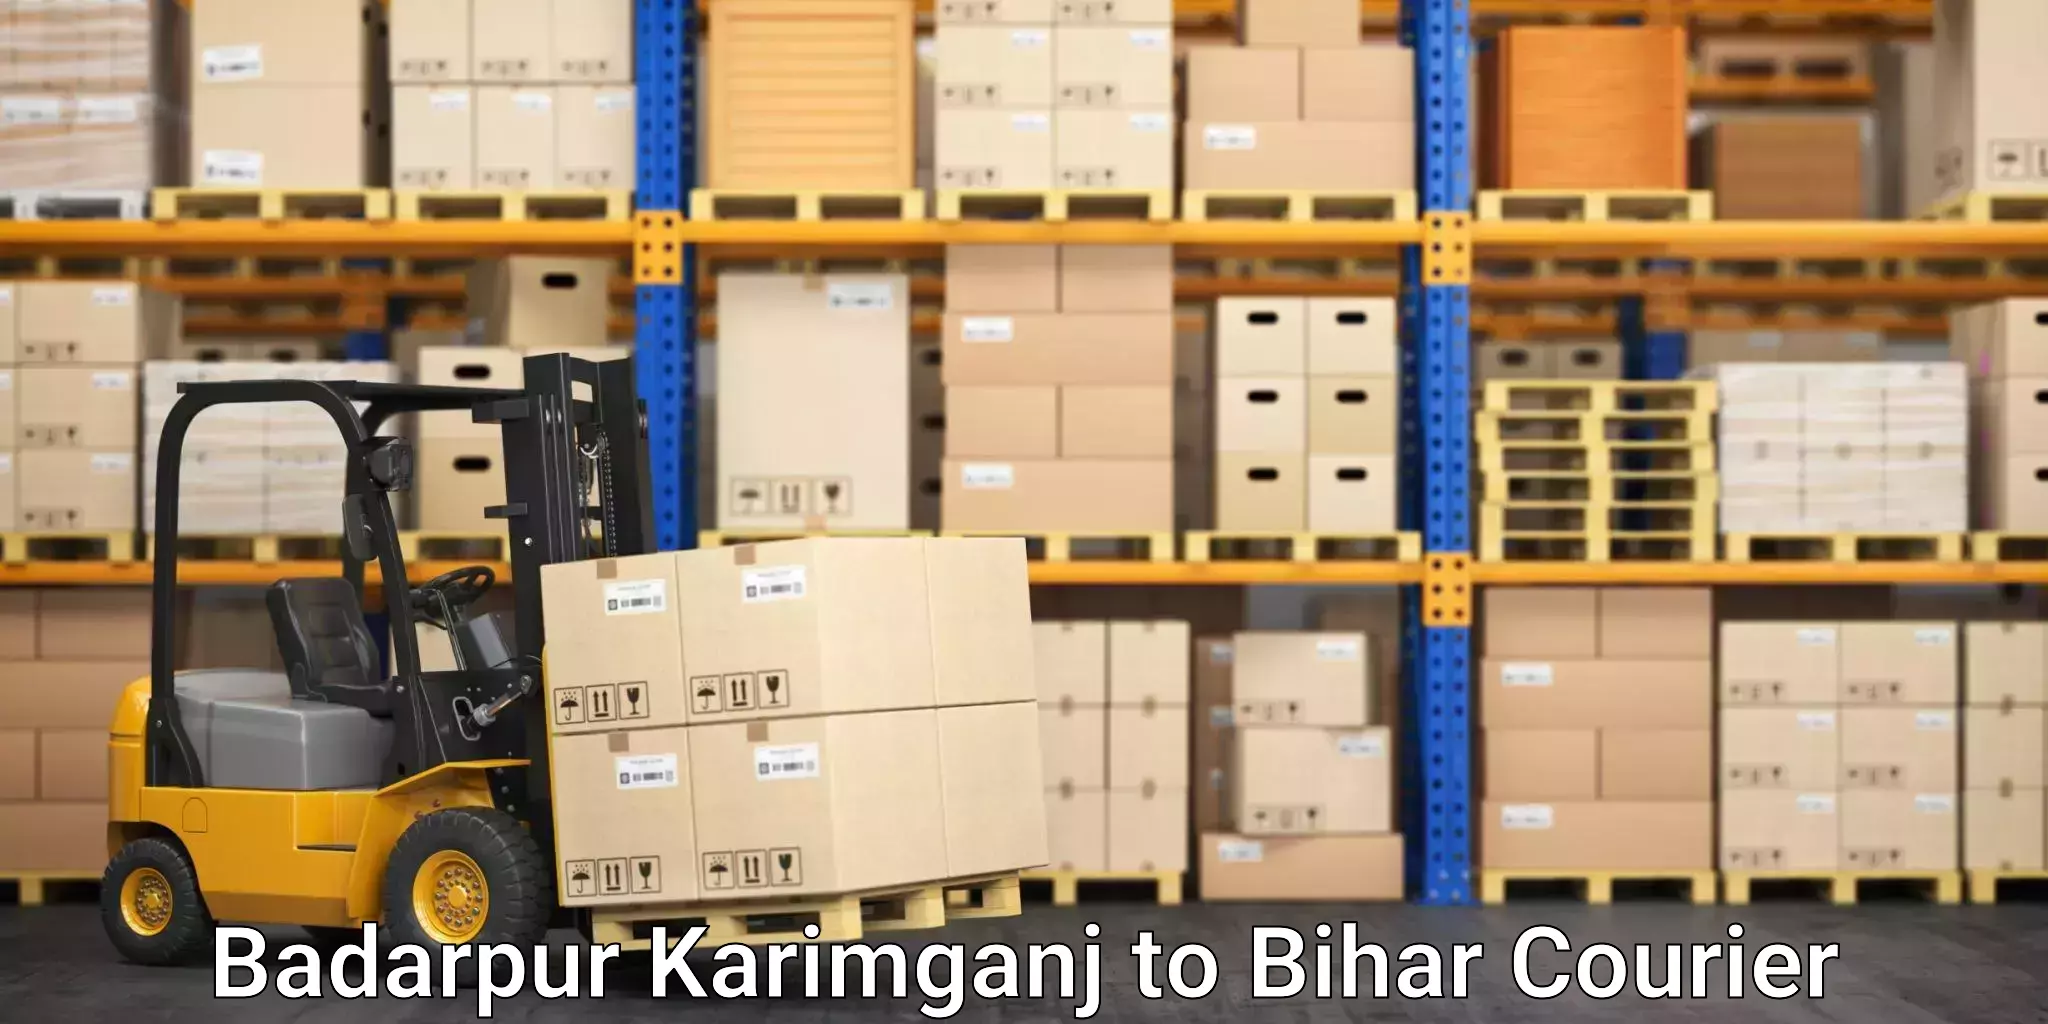 Automated shipping processes Badarpur Karimganj to Bankipore